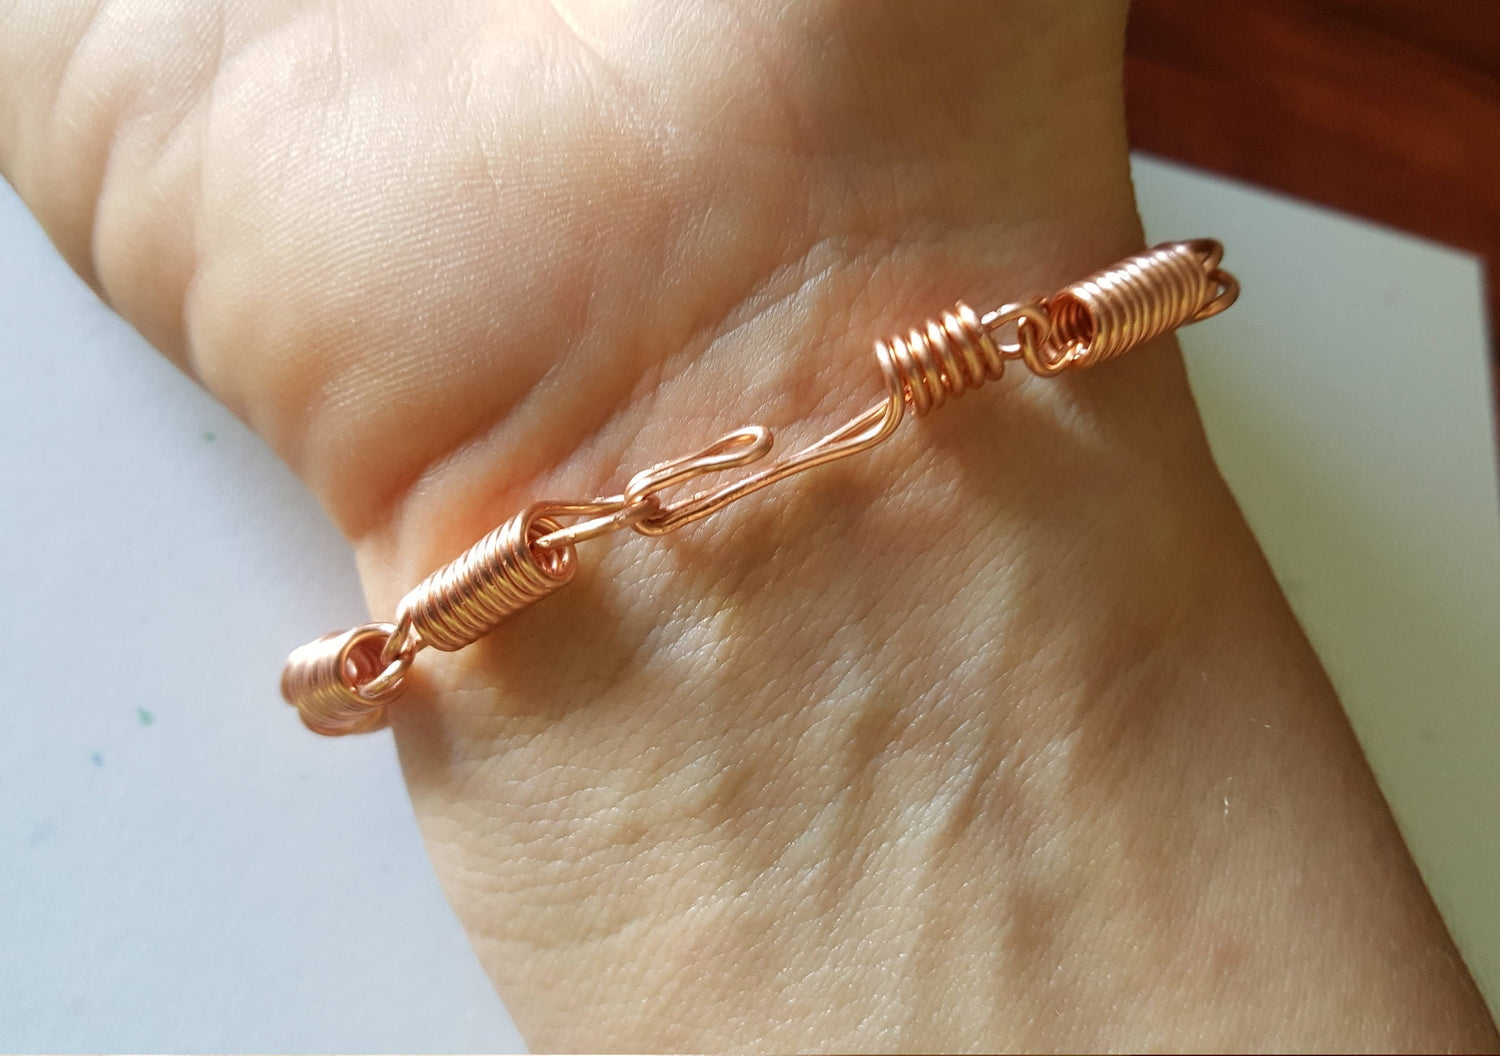 Pure Copper Wire Coiled Spring Bracelet 18 Gauge Handmade – handmadebymonika